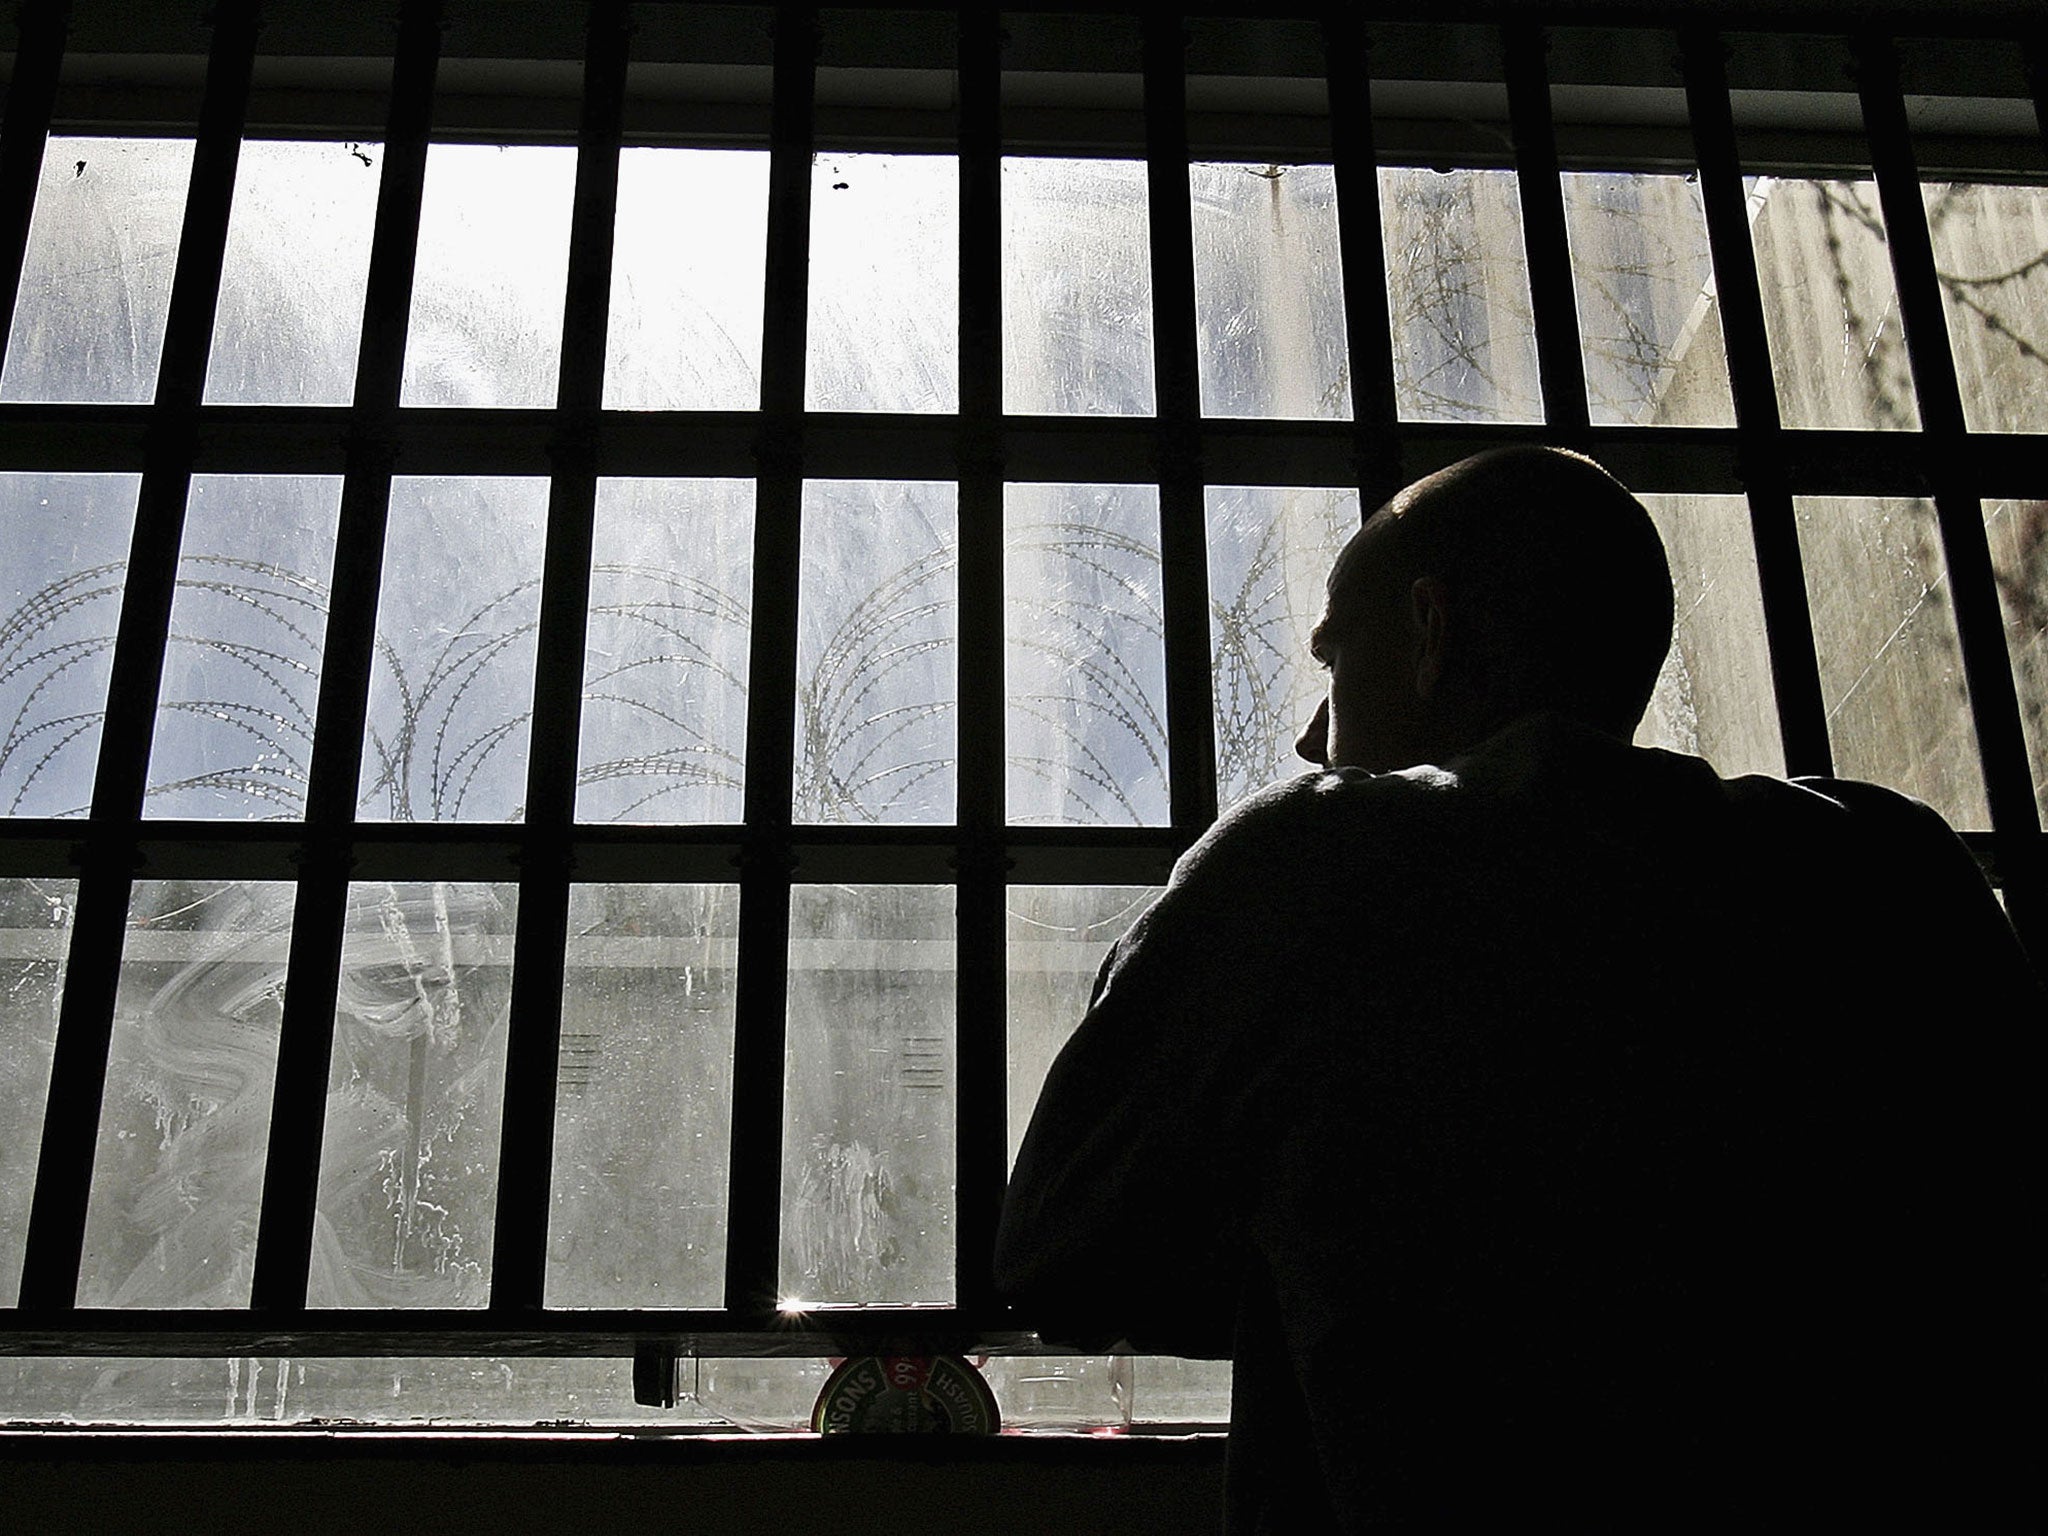 https://static.independent.co.uk/s3fs-public/thumbnails/image/2015/09/30/15/Prisoner.jpg